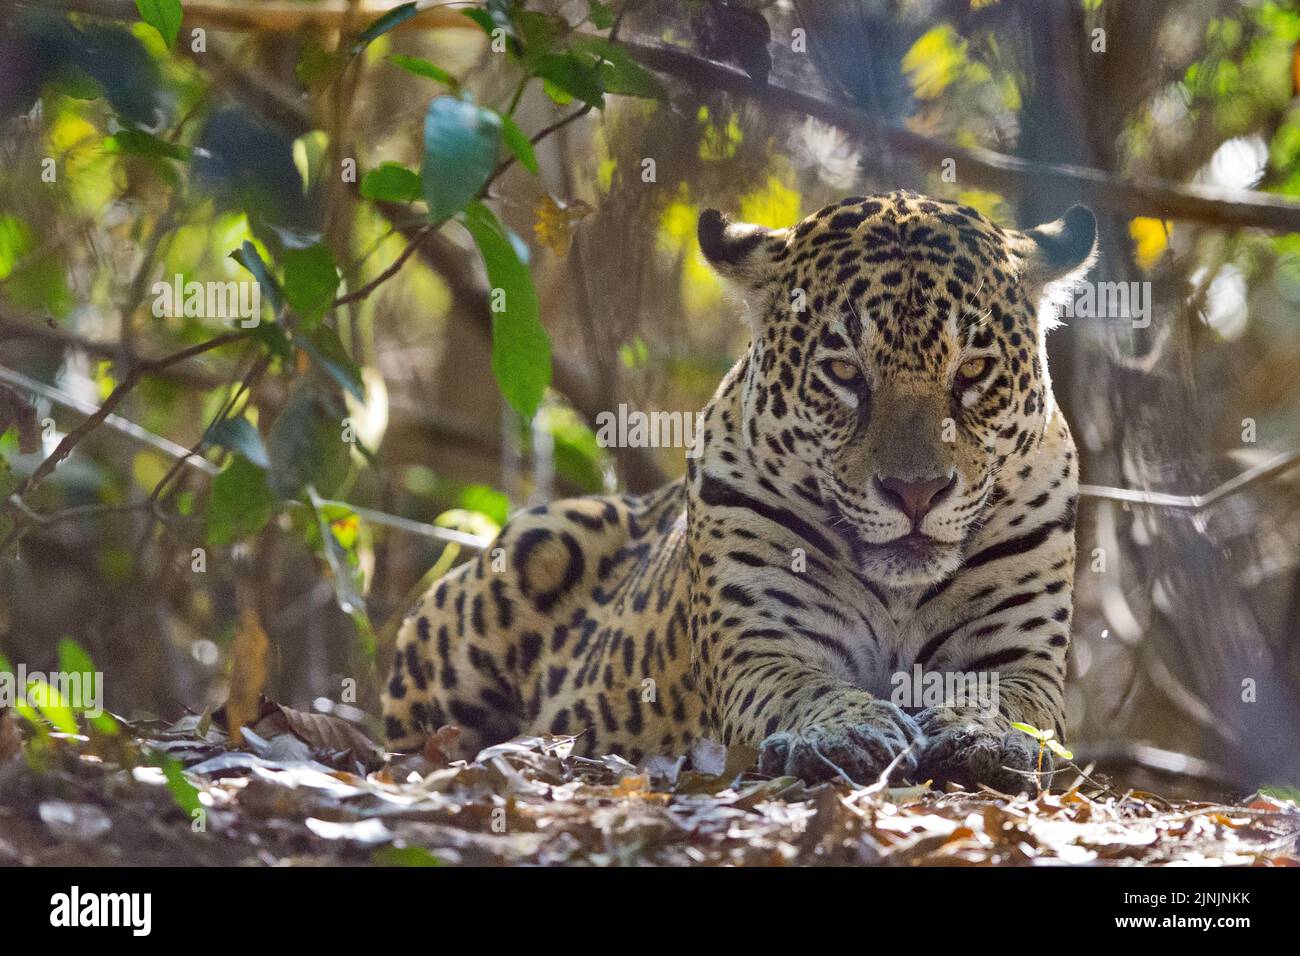 jaguar (Panthera onca), descansando en la sombra, vista frontal, Brasil, Pantanal Foto de stock